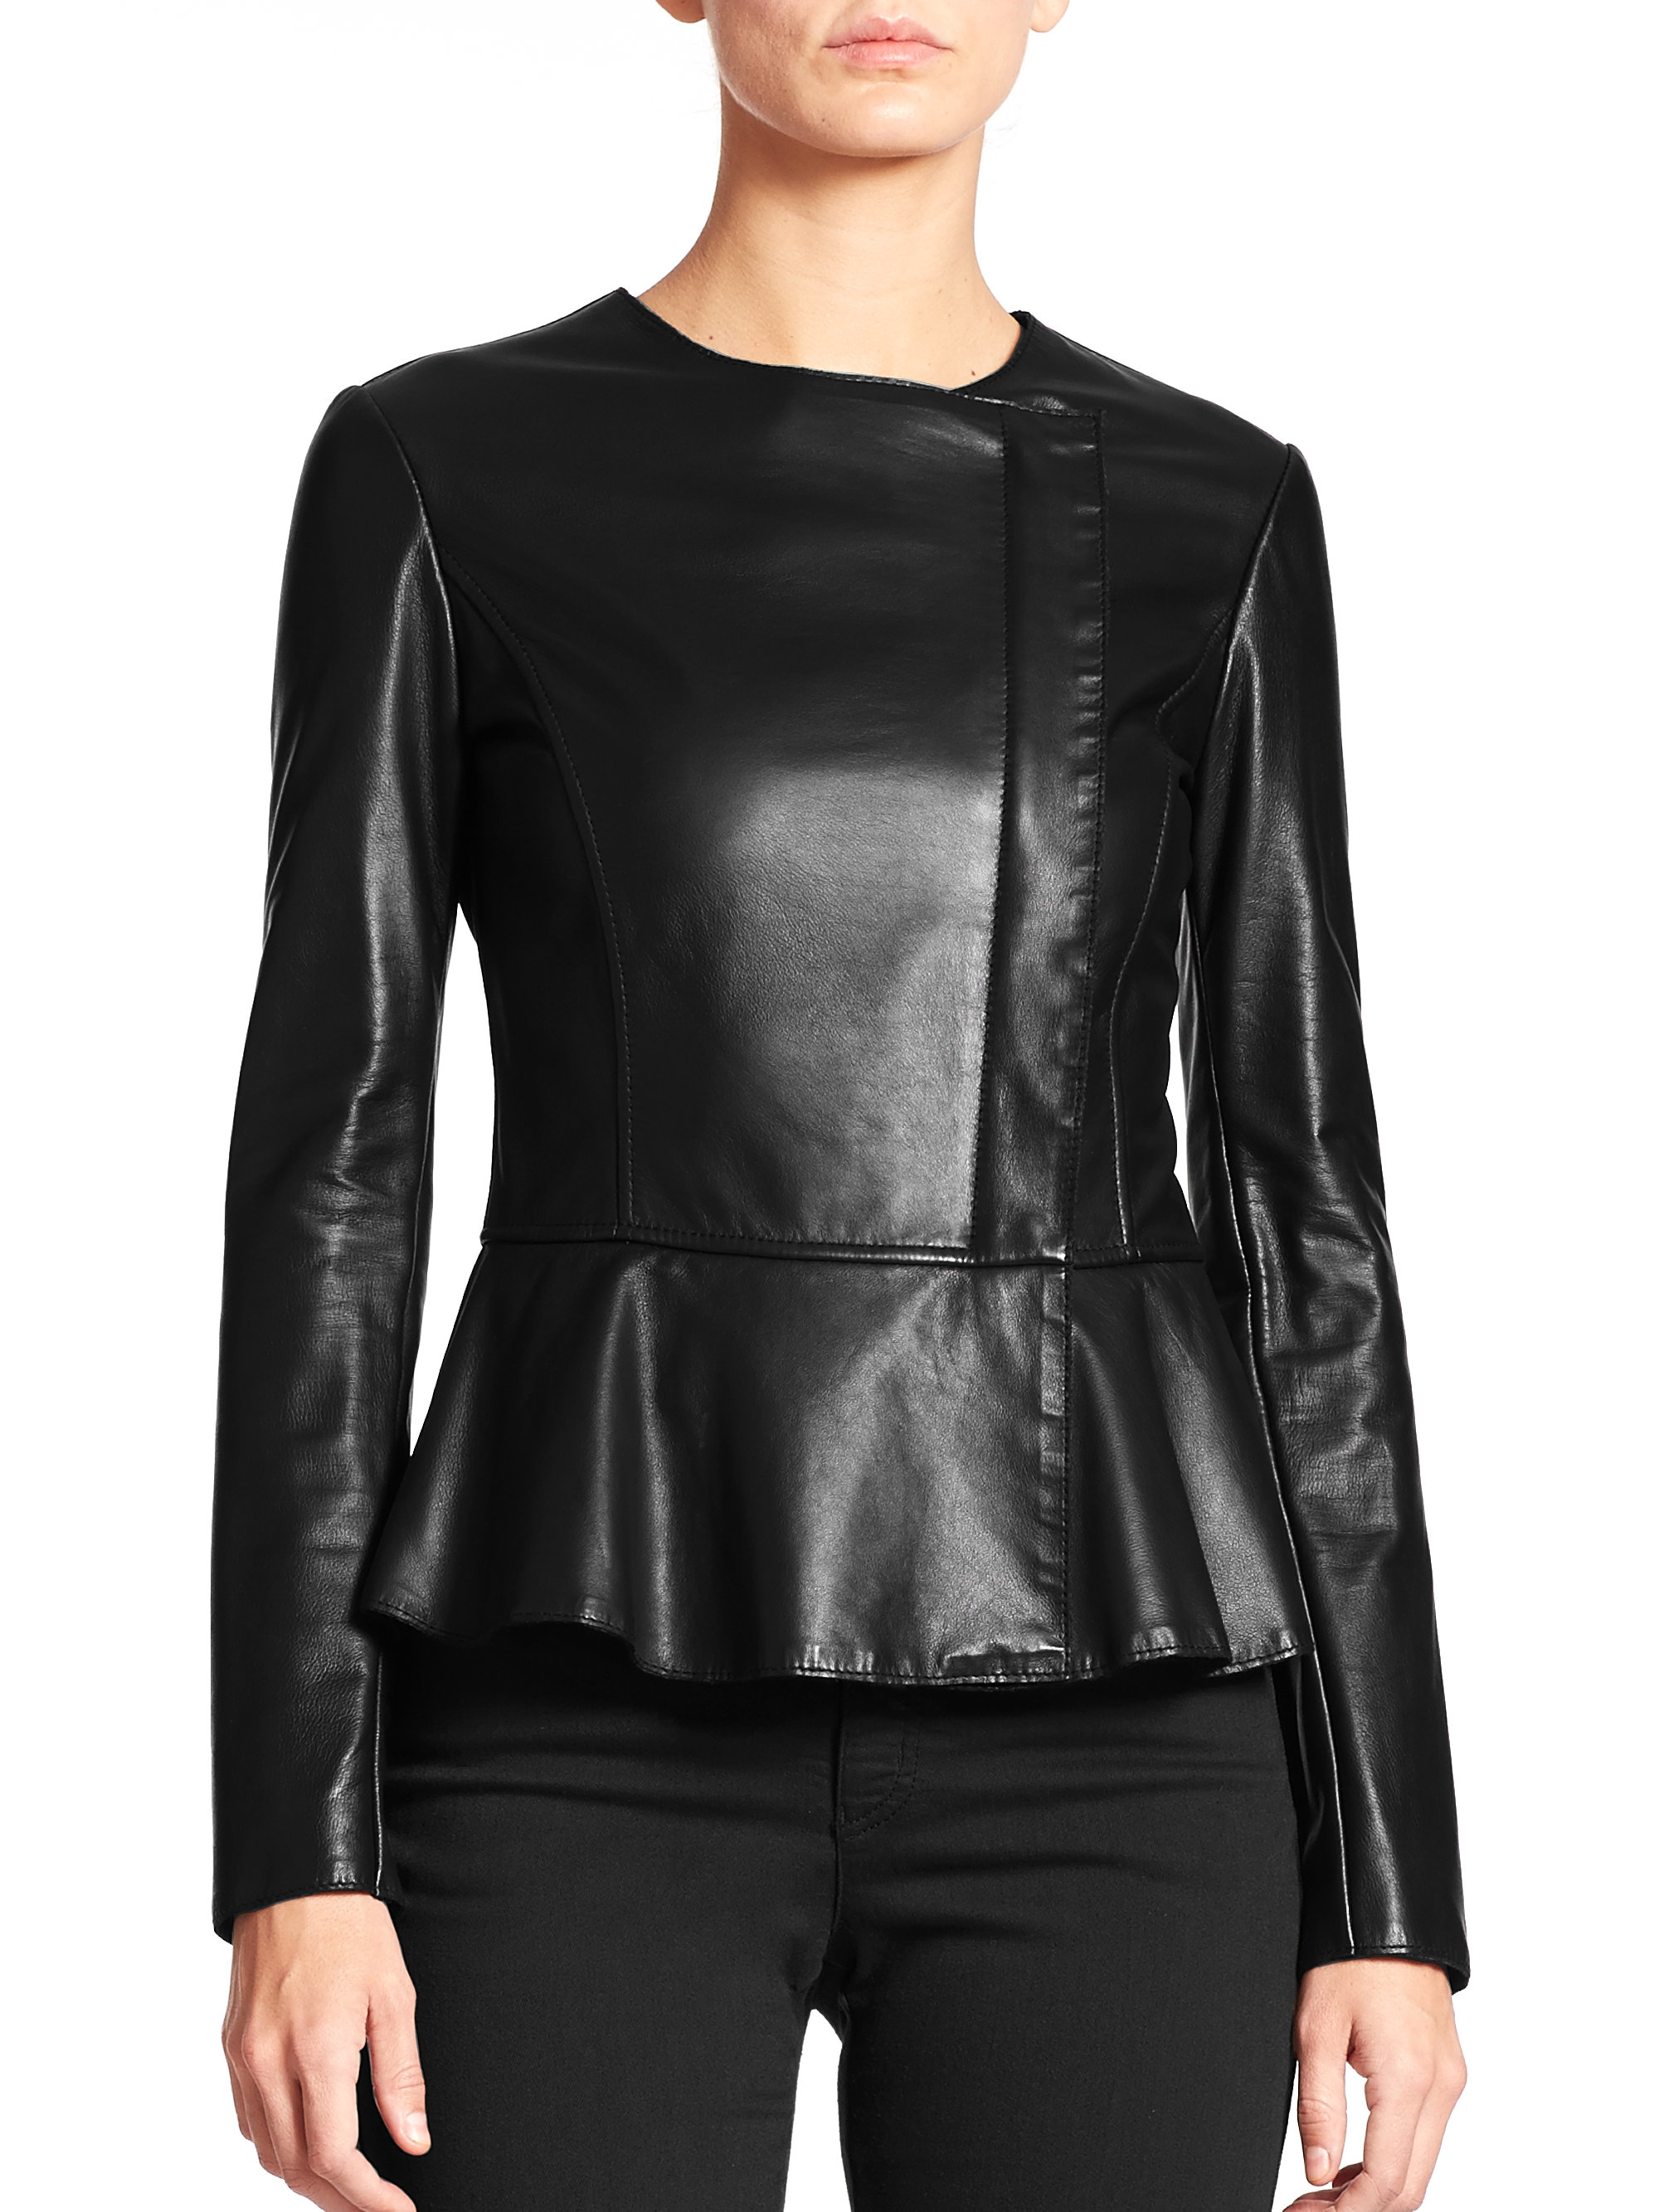 Armani Leather Peplum Jacket in Black | Lyst